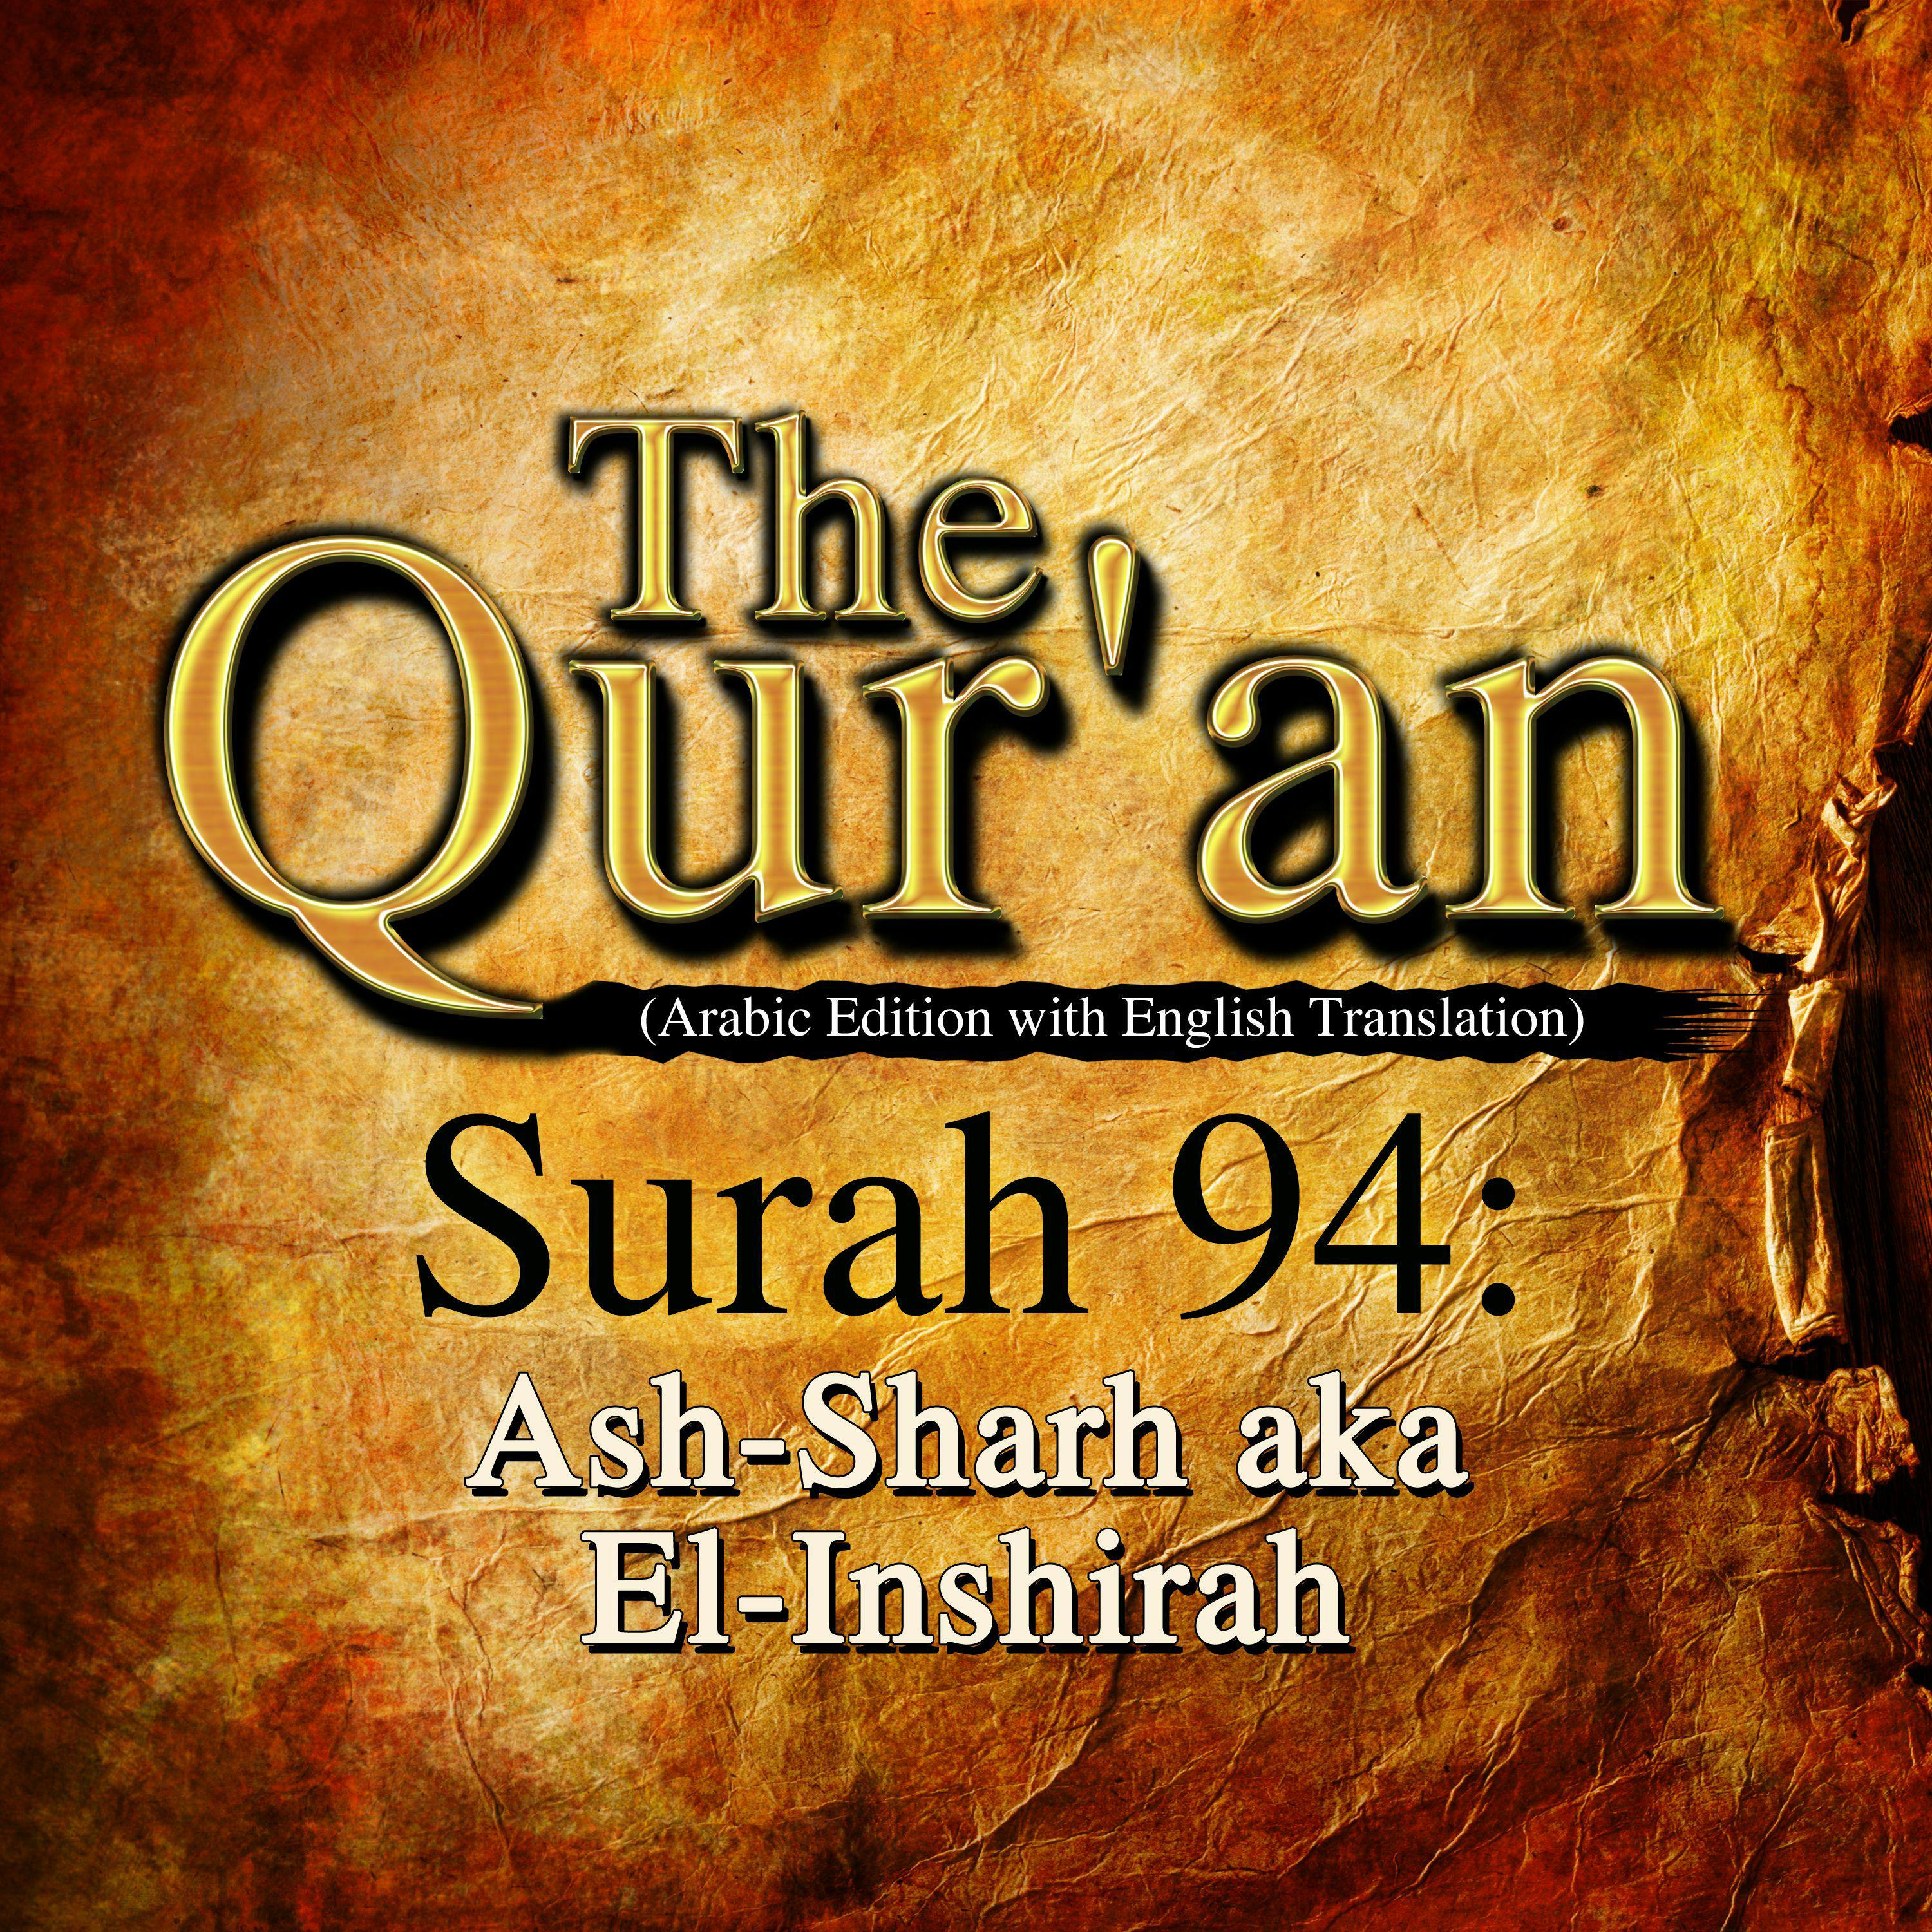 The Qur'an: Surah 94: Ash-Sharh aka El-Inshirah - One Media iP LTD